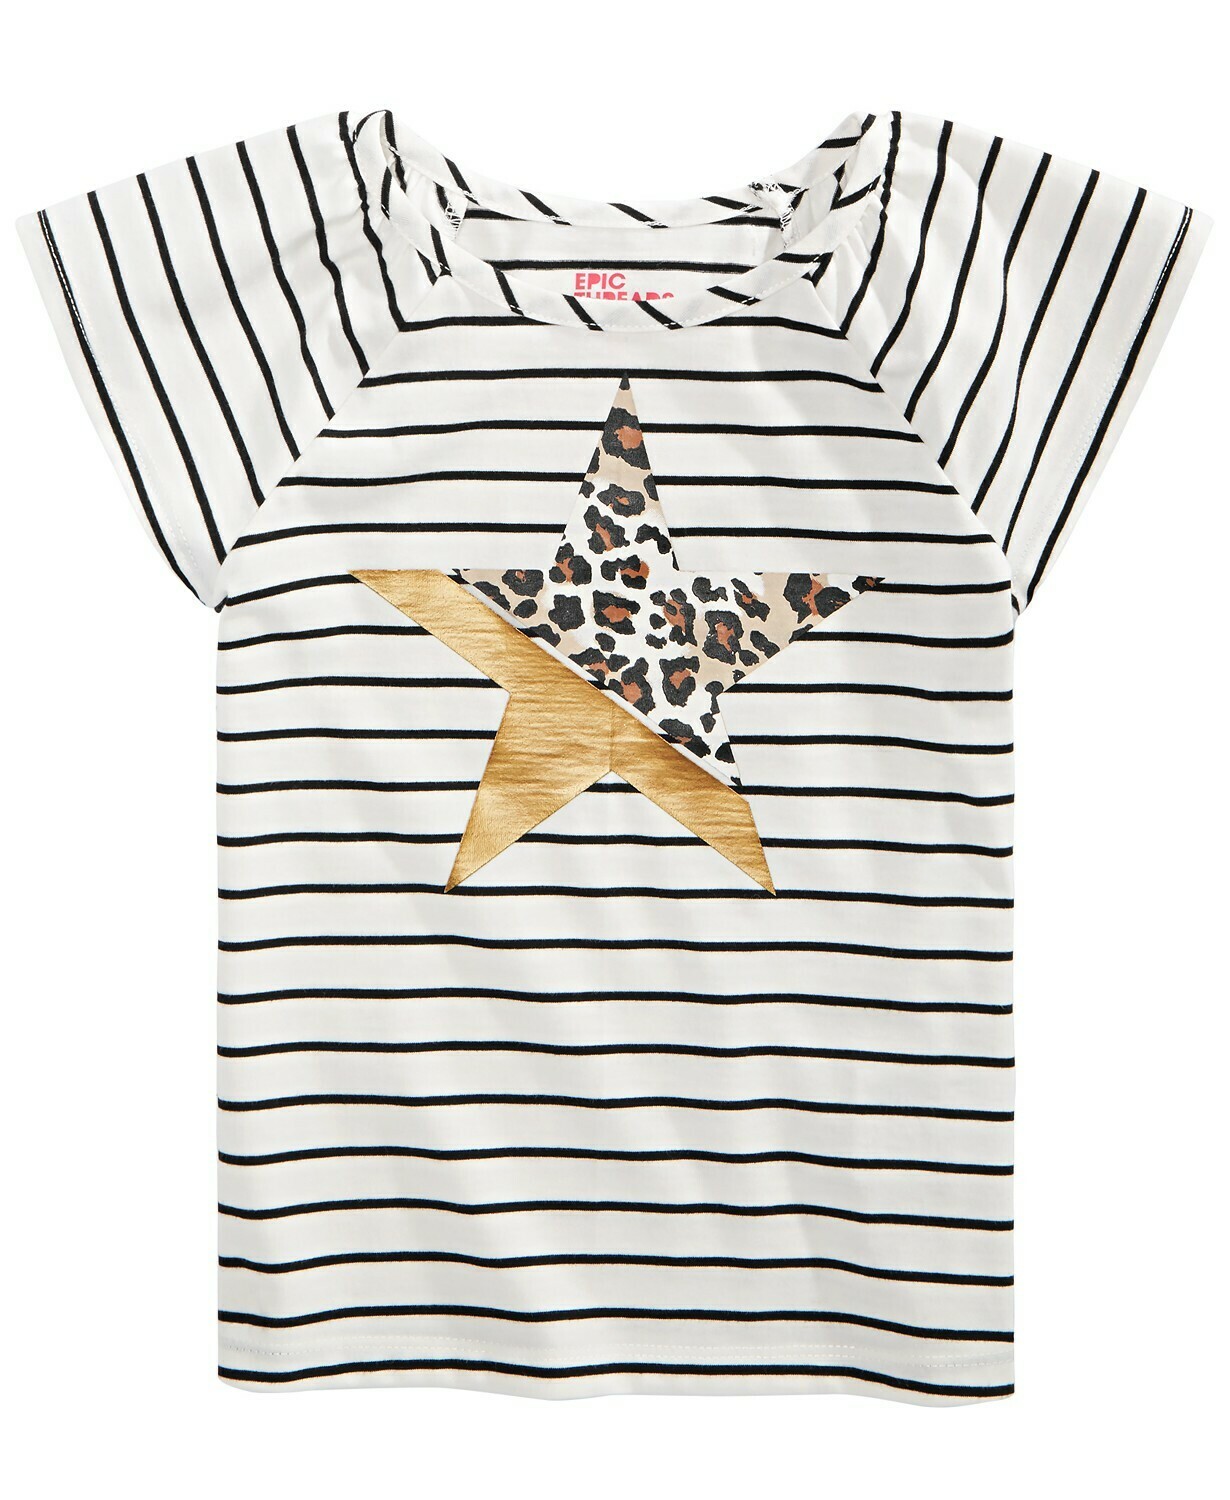 Epic Threads Toddler Girls Striped Star T-Shirt